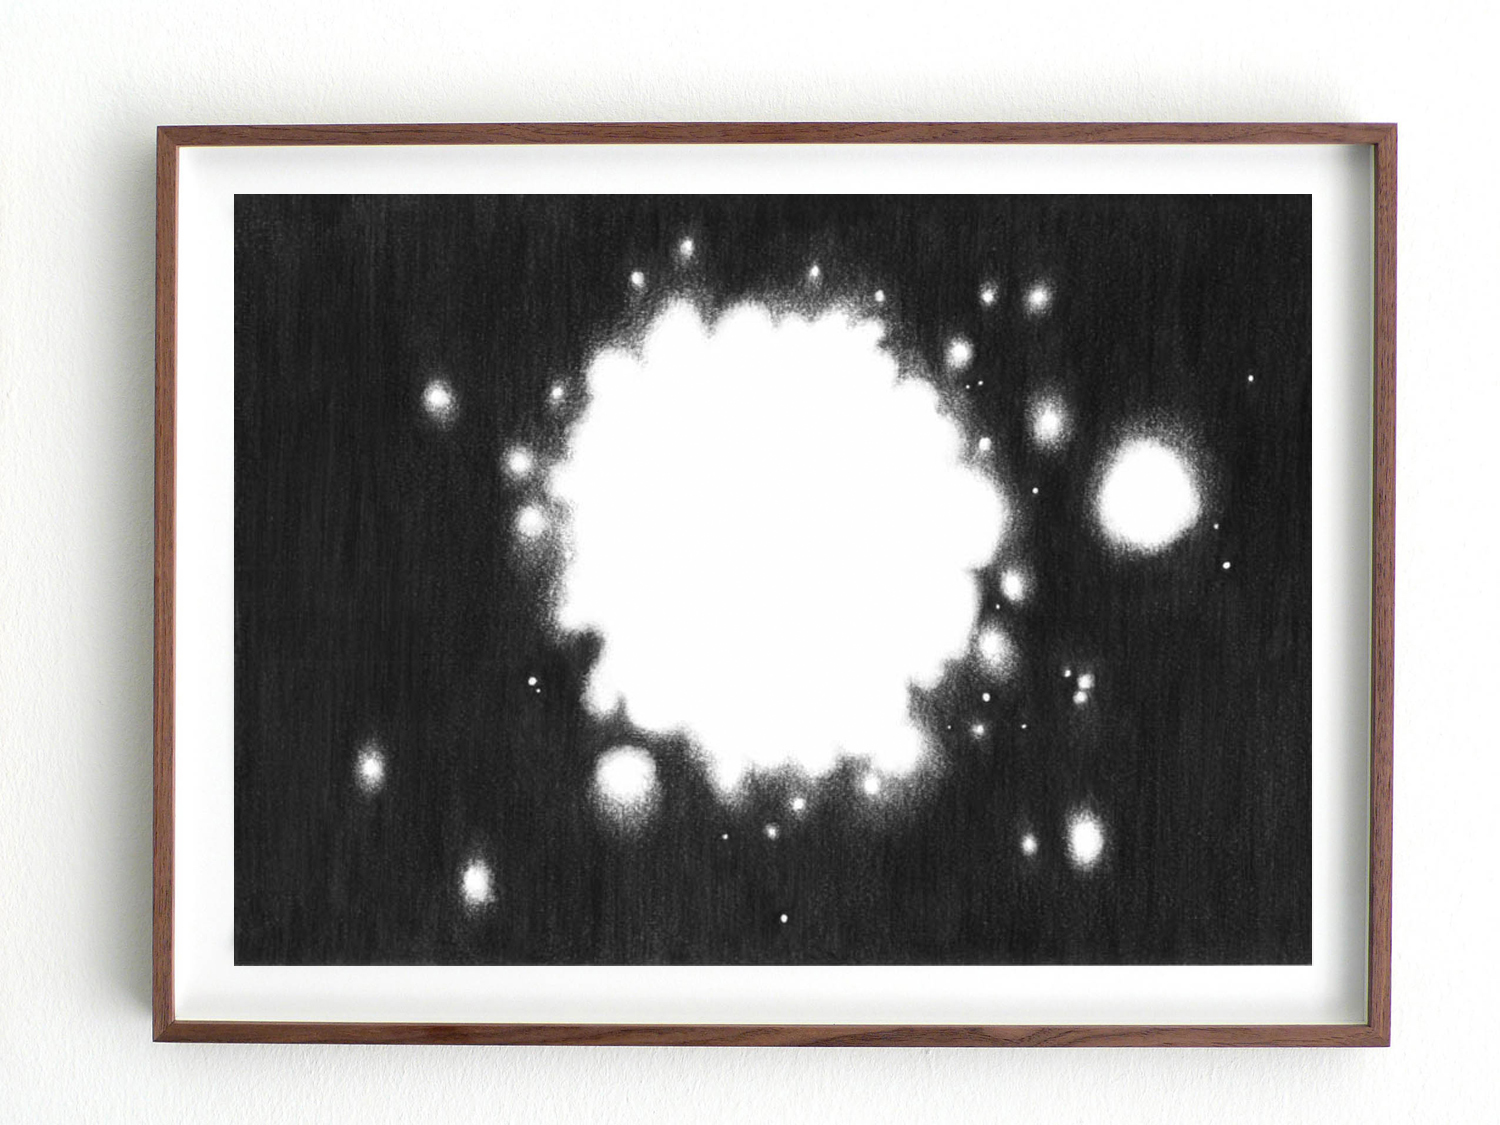   Vision/ x, 2008, pencil on paper, 29,7 x 42cm  